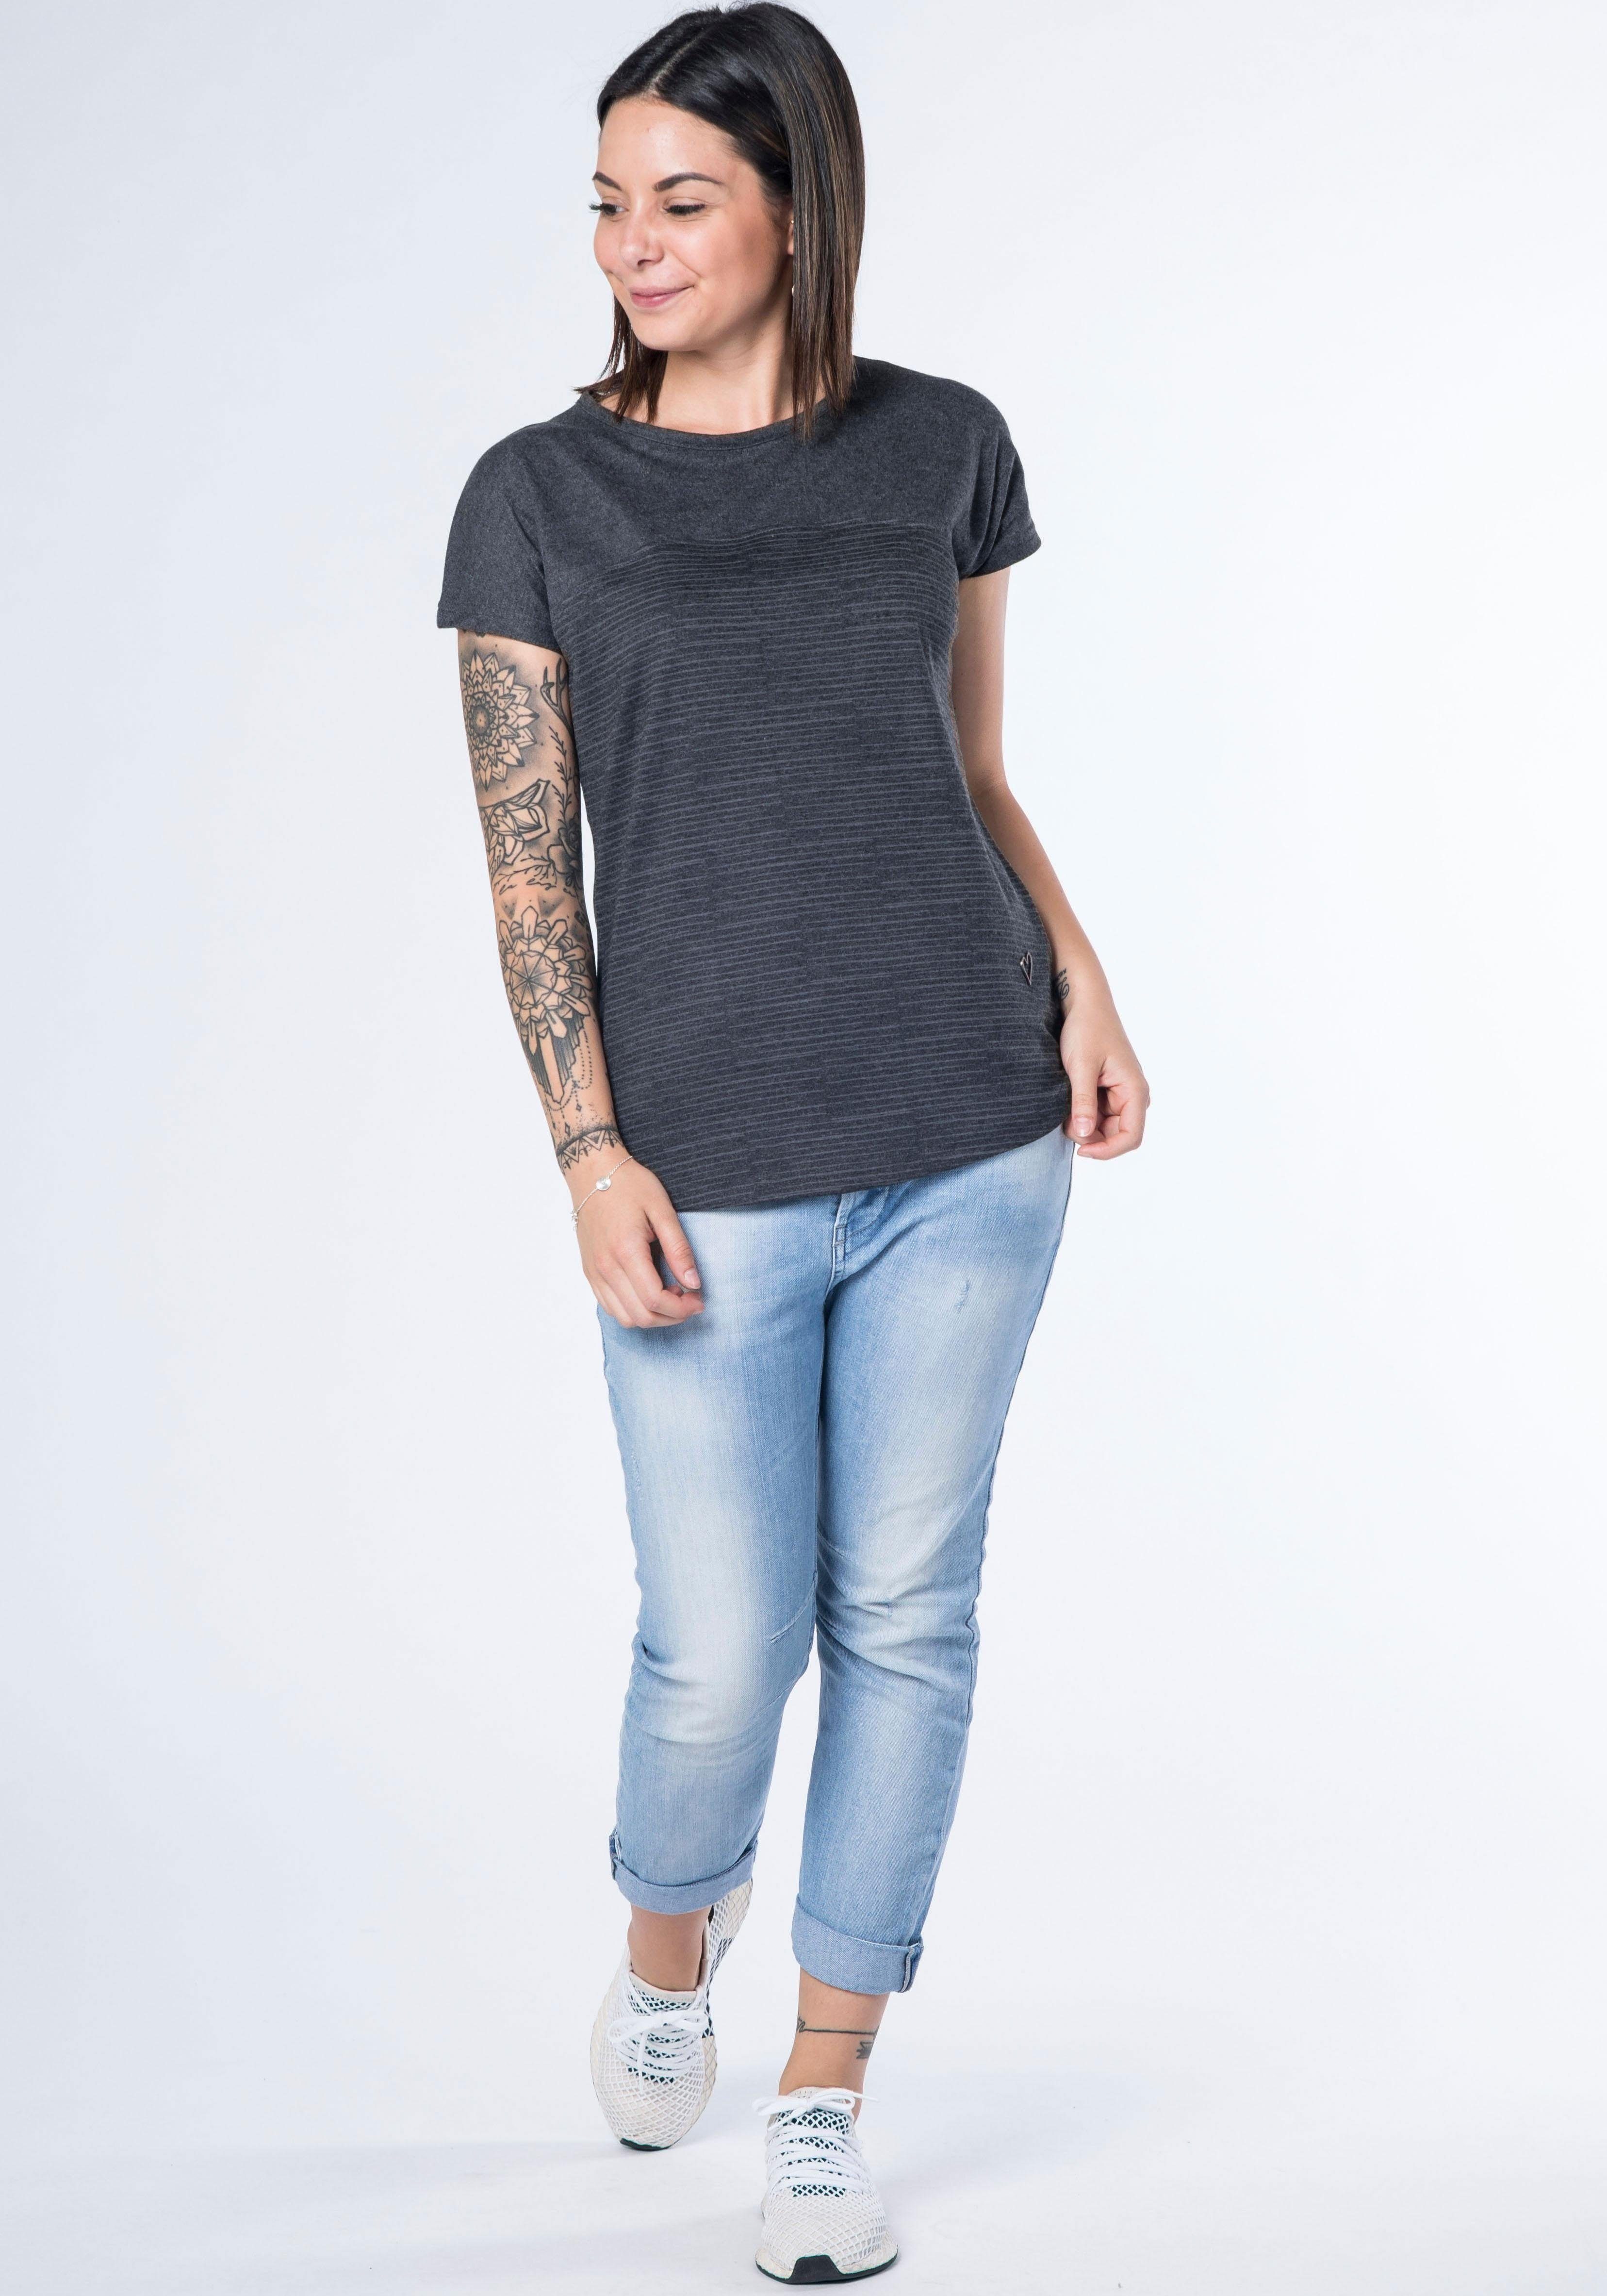 Alife & Longshirt Musterprints mit Streifen-oder moonless trendy T-Shirt Kickin stripes